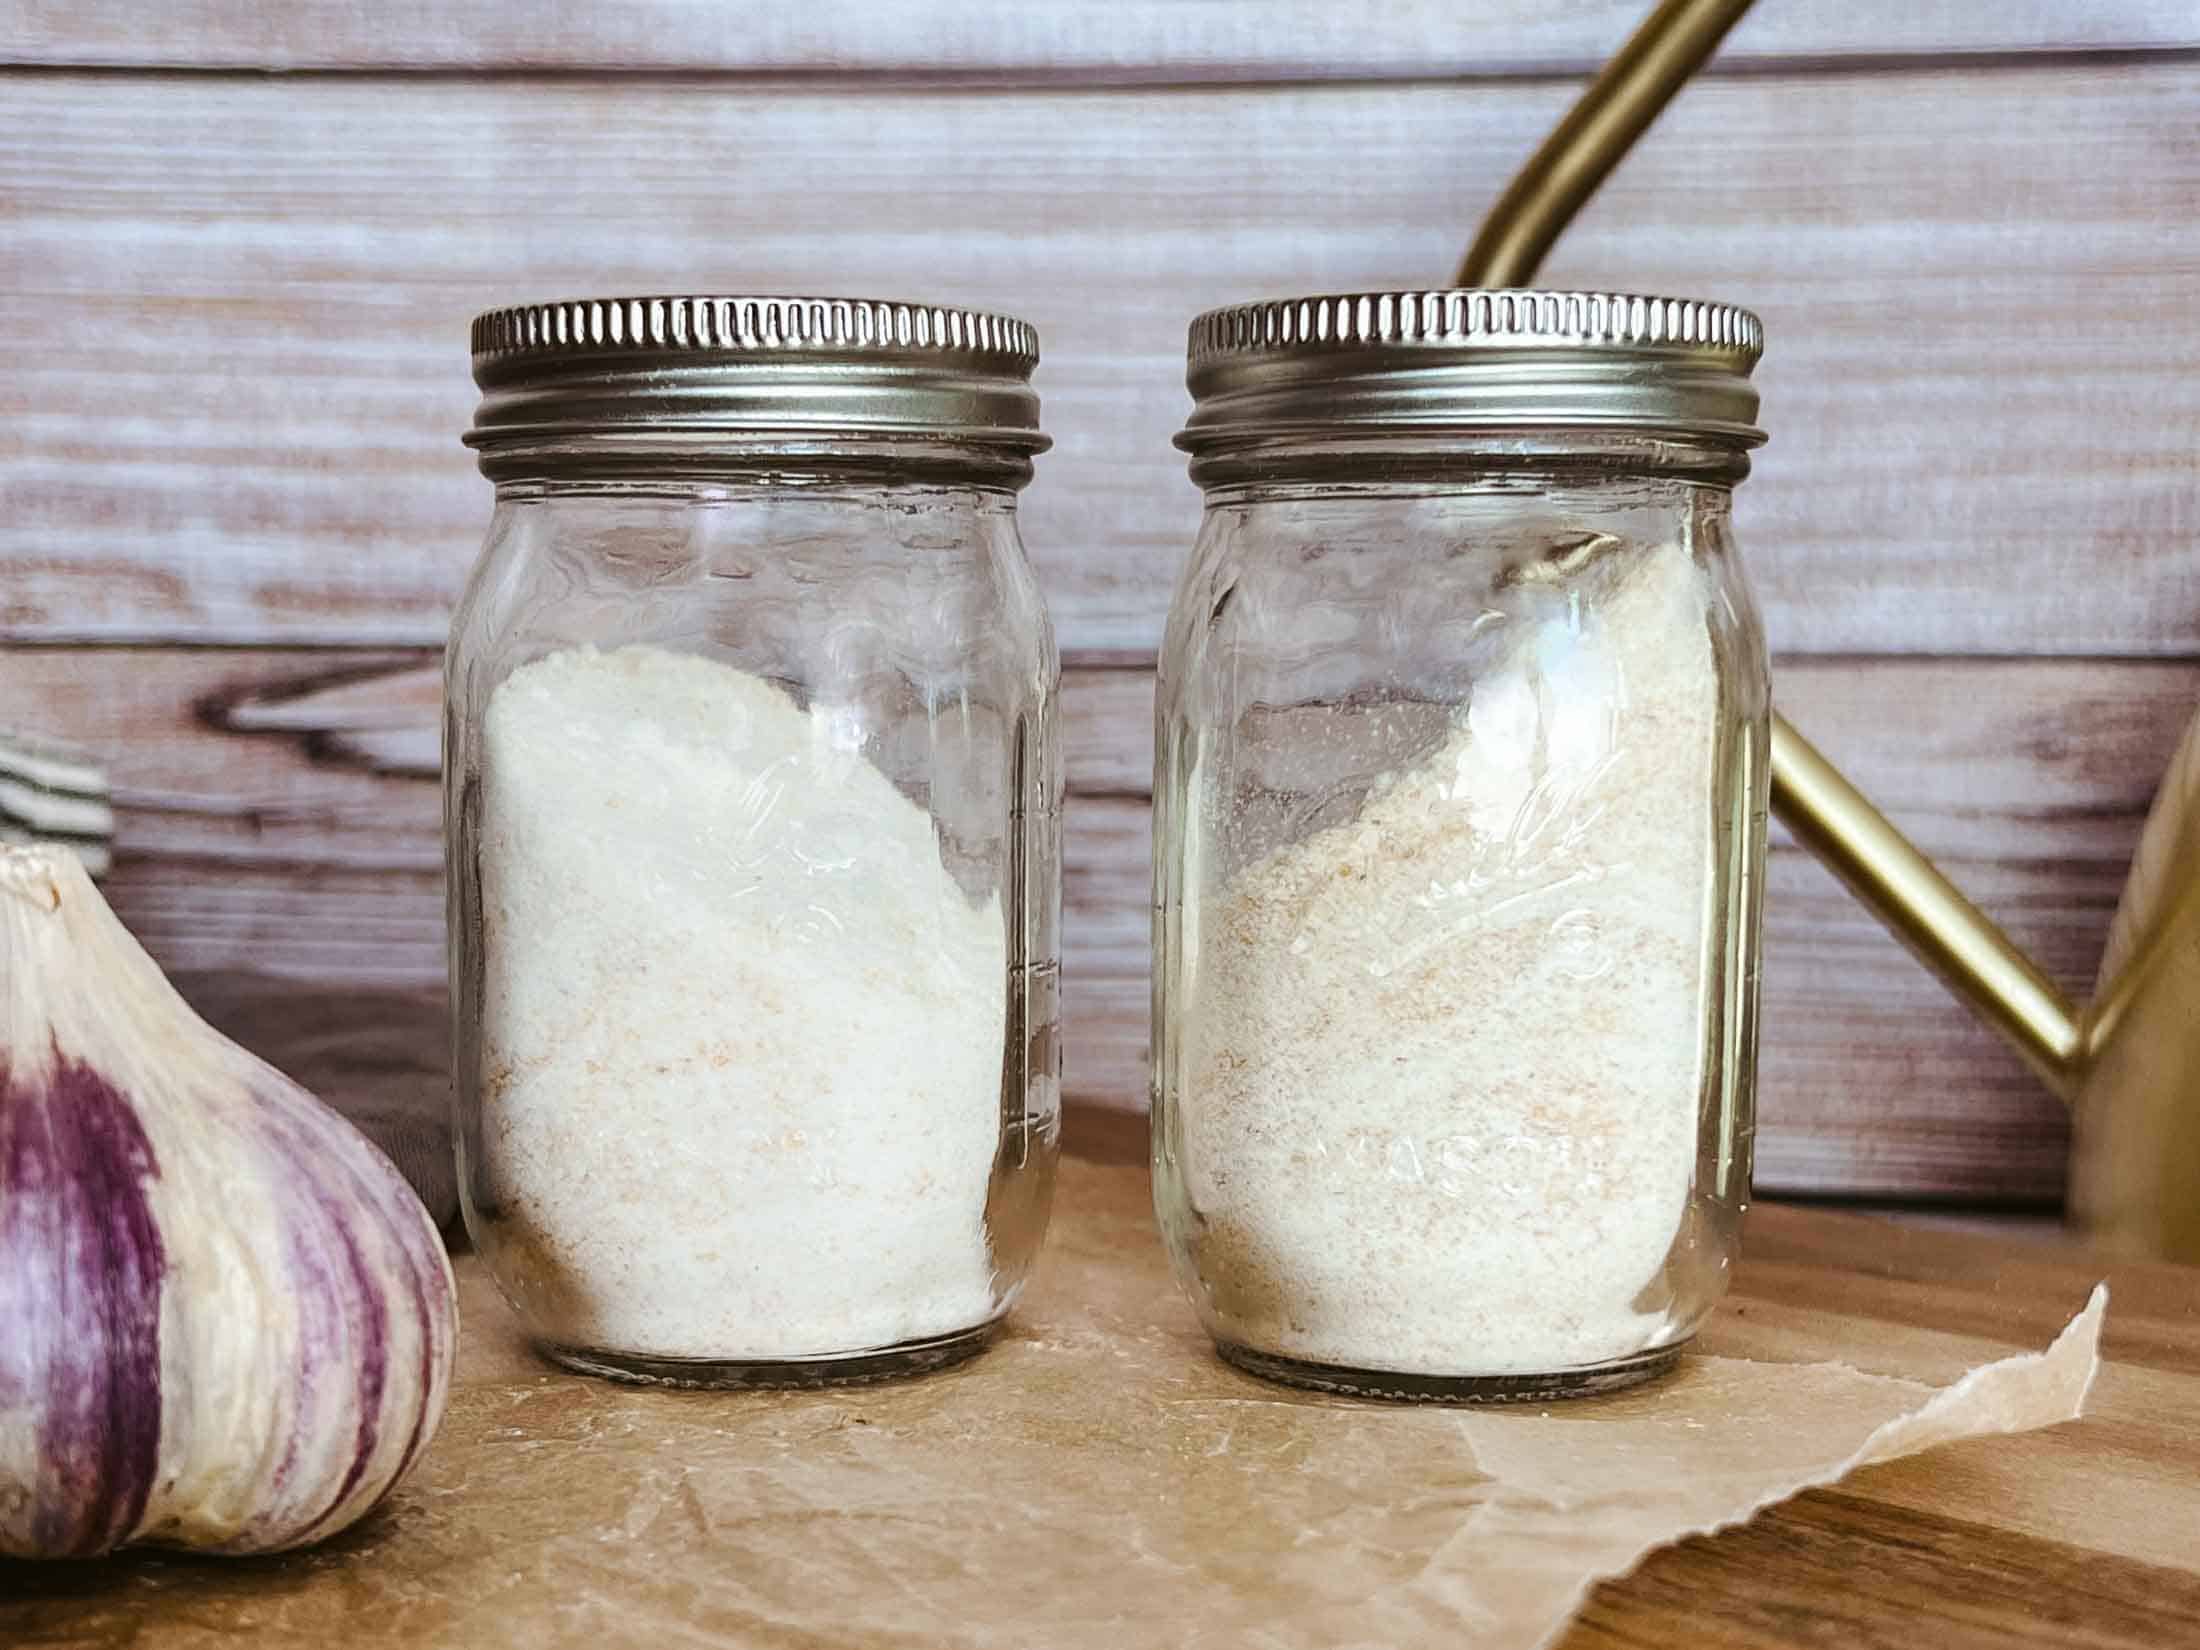 Homemade garlic powder and garlic salt in glass spice jars.